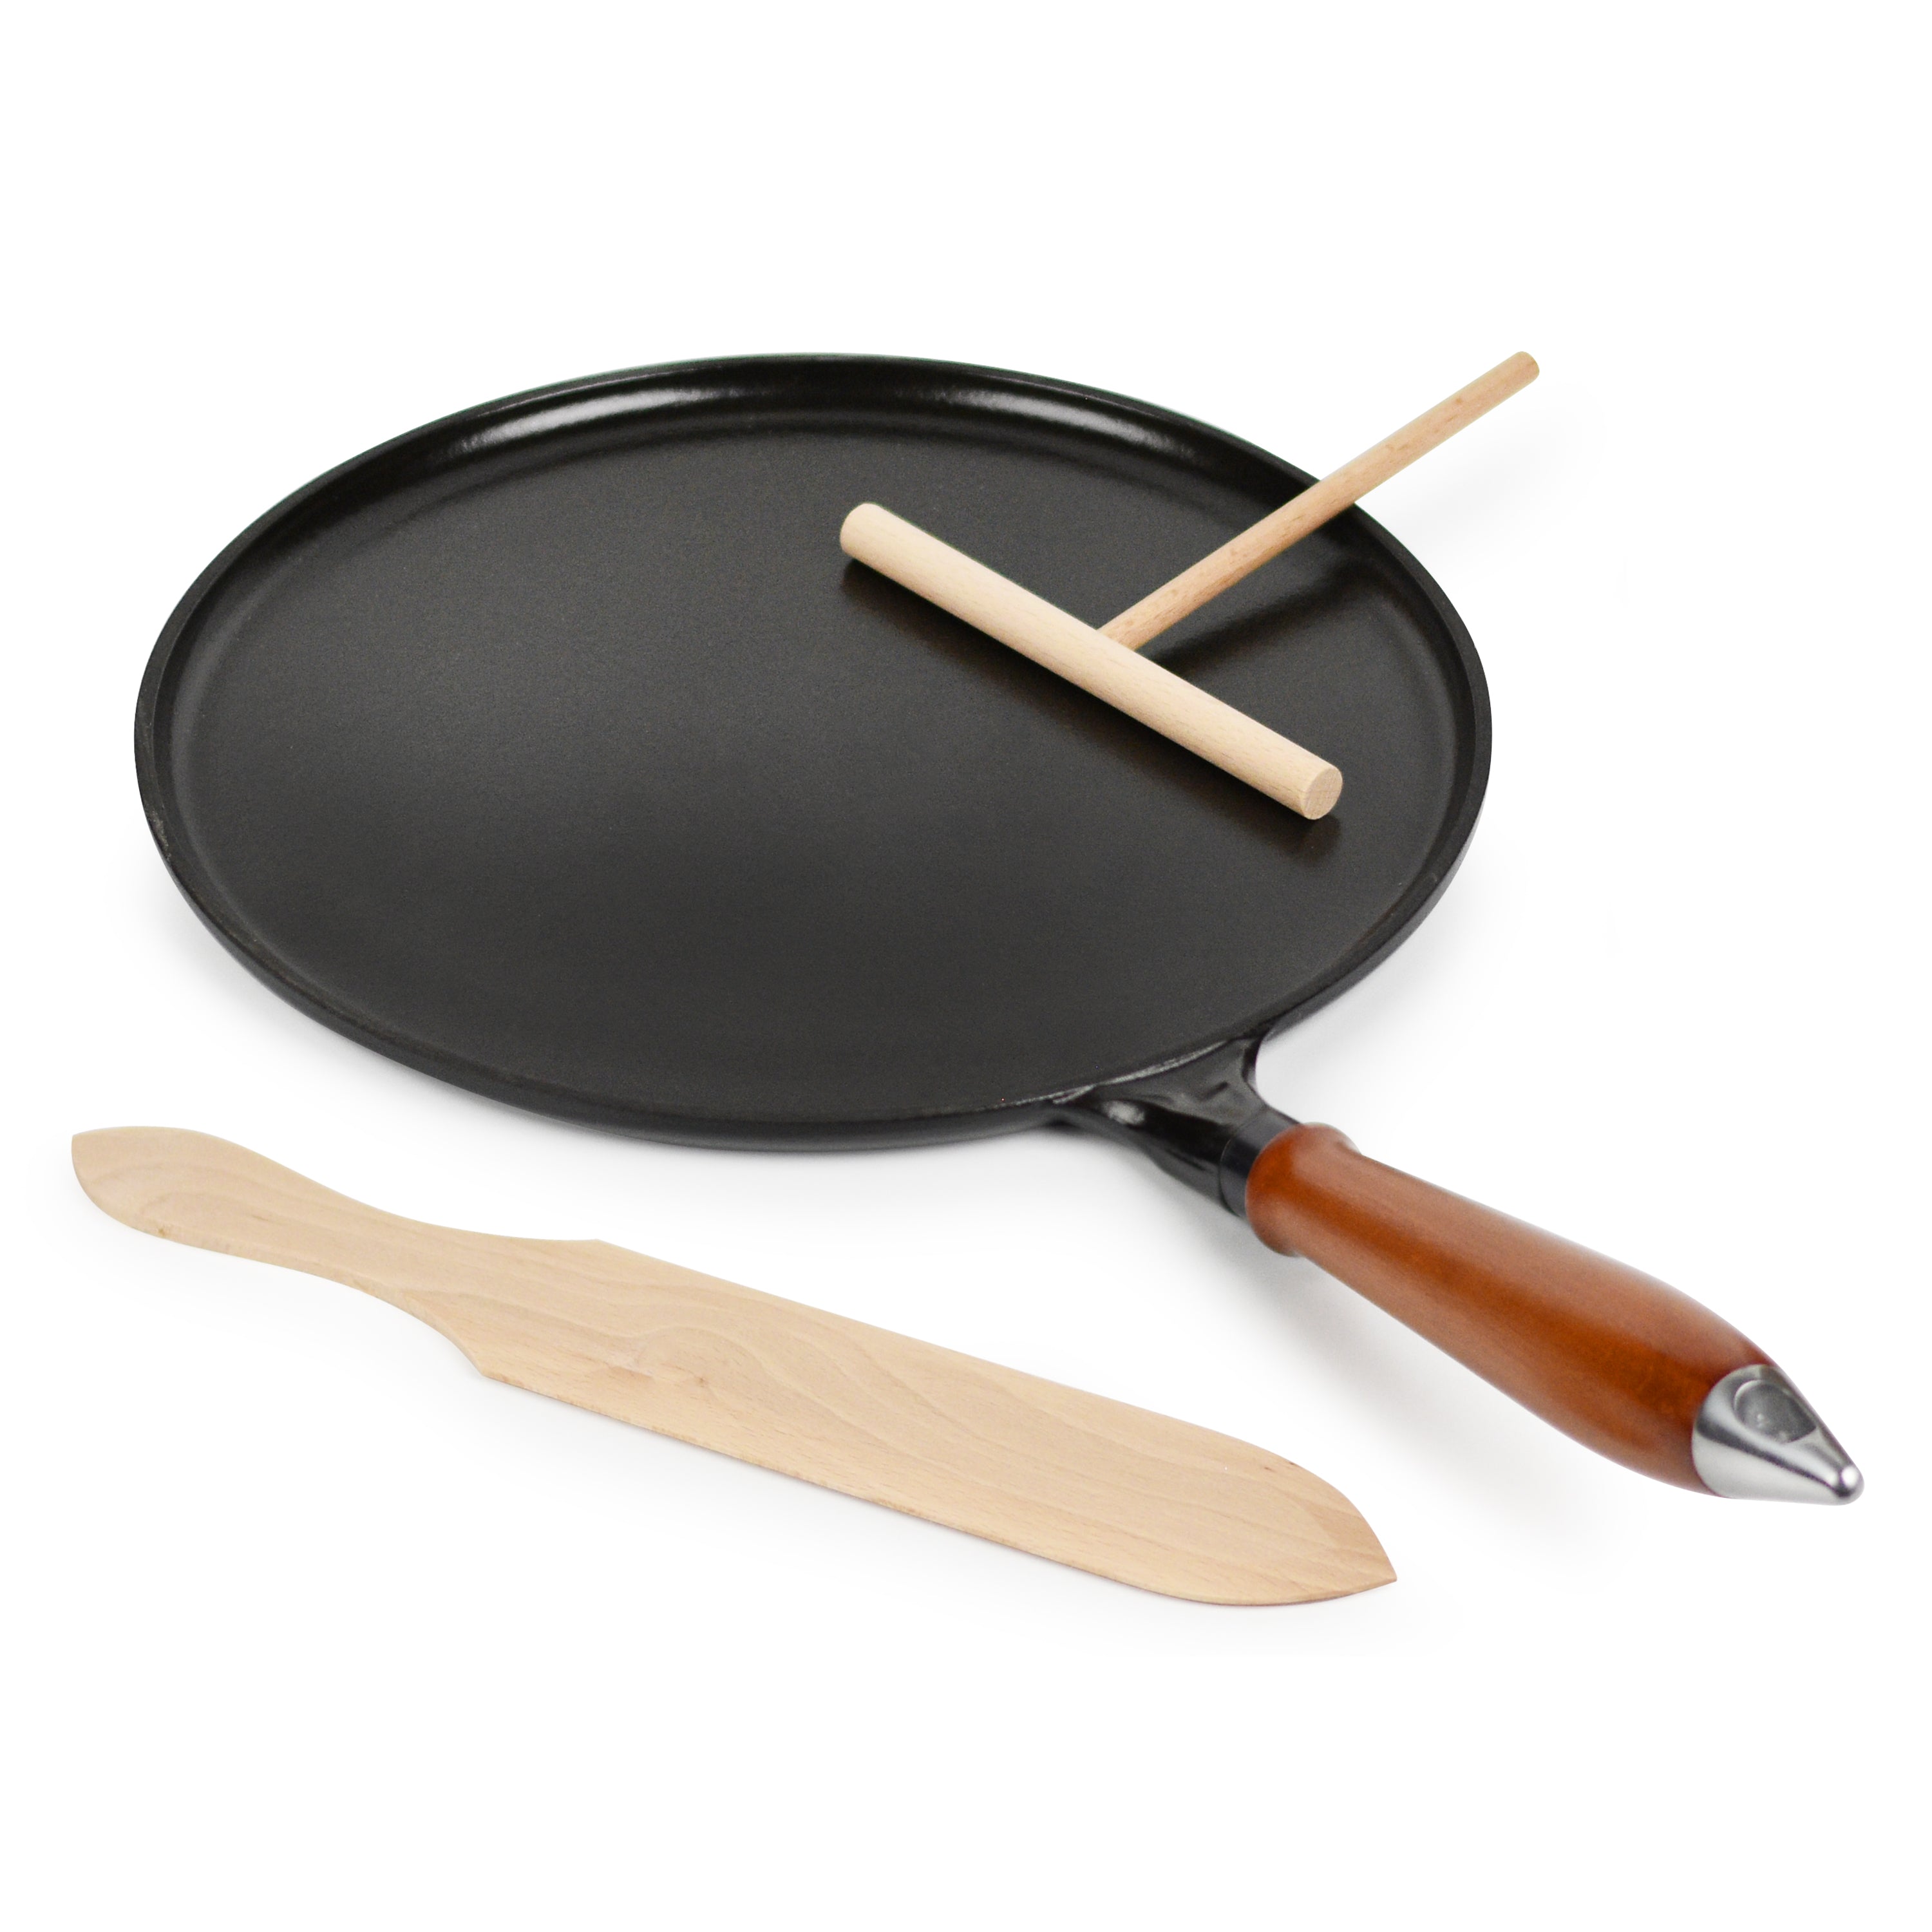 Staub cast iron crepe pan wooden handle